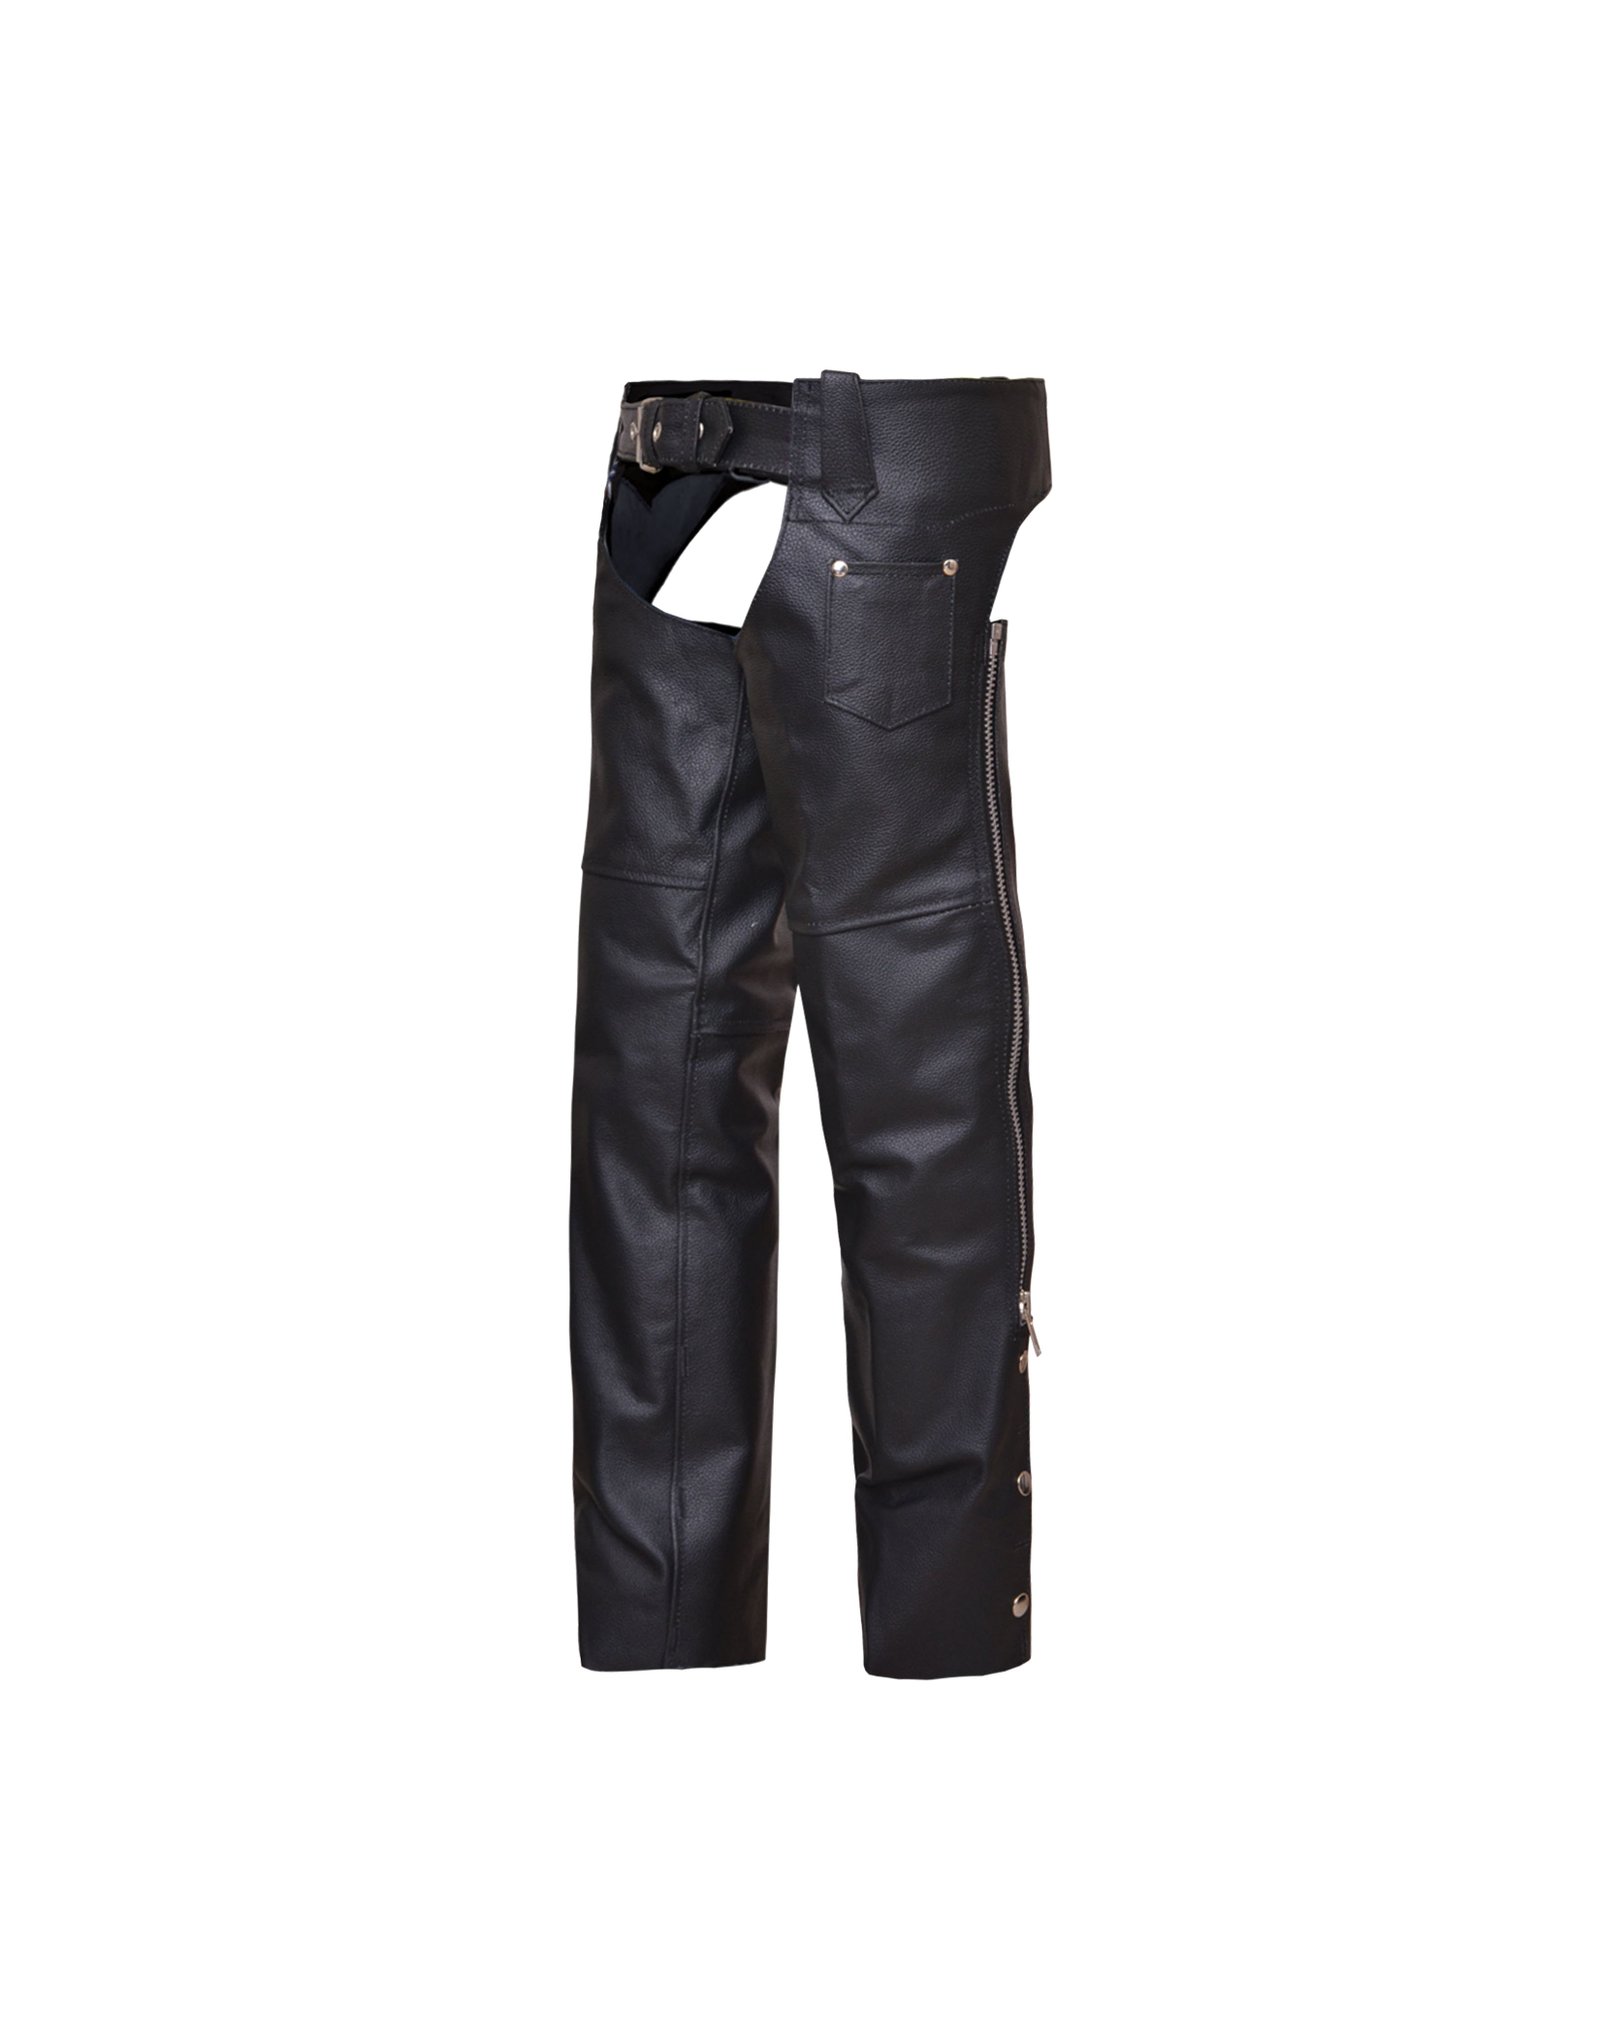 Leather Chaps - Kid's - Black - Motorcycle - 1025-00-UN